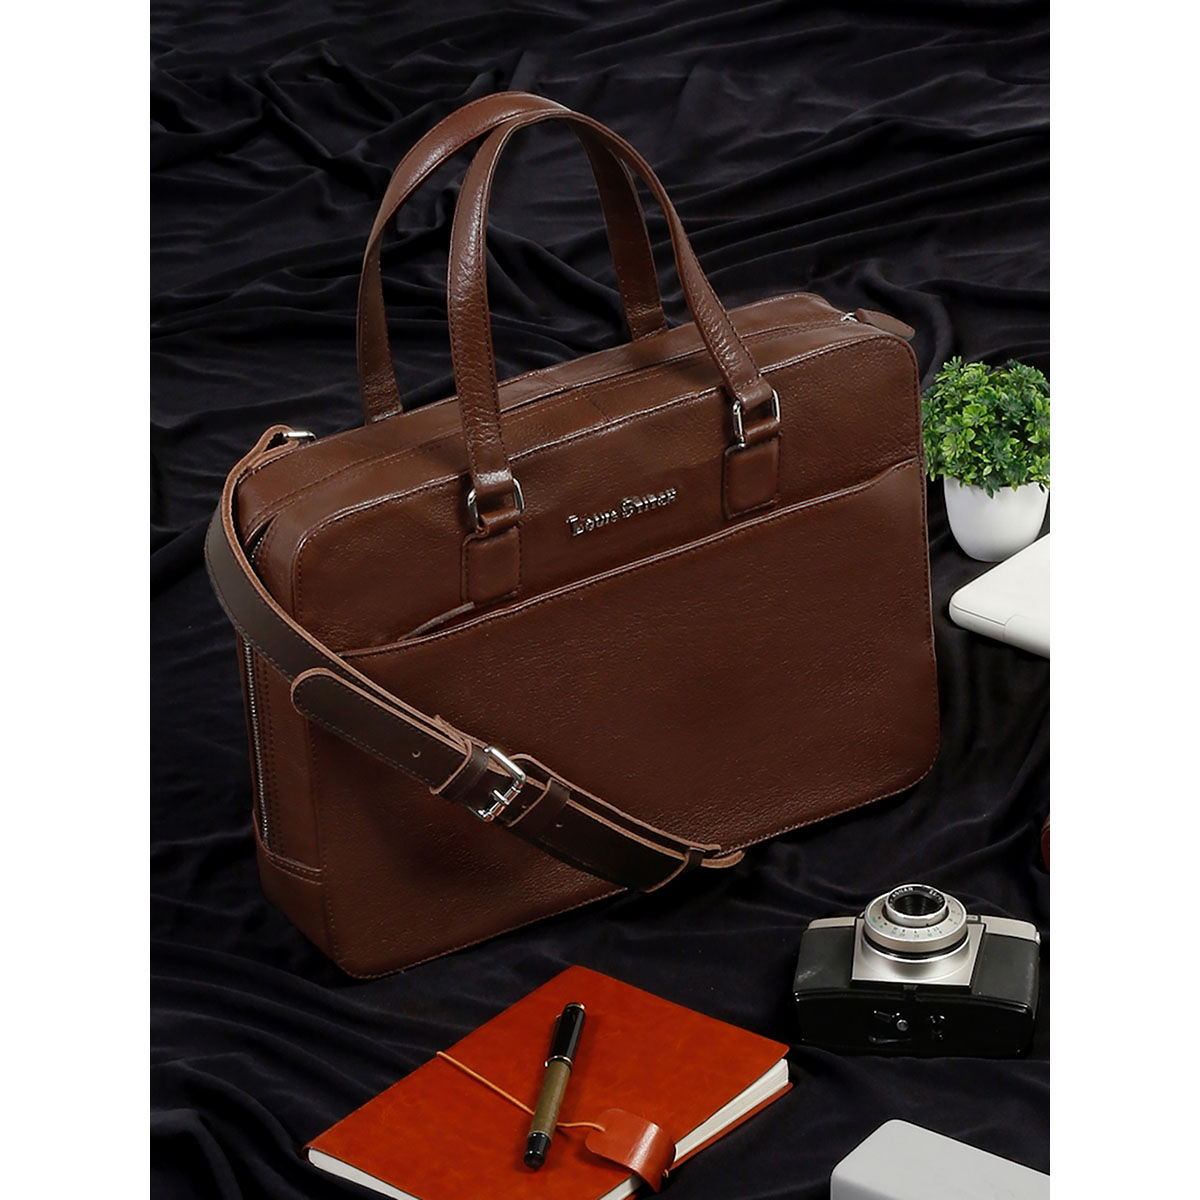 Louis Stitch Brown Italian Leather Laptop Bag Multifunctional